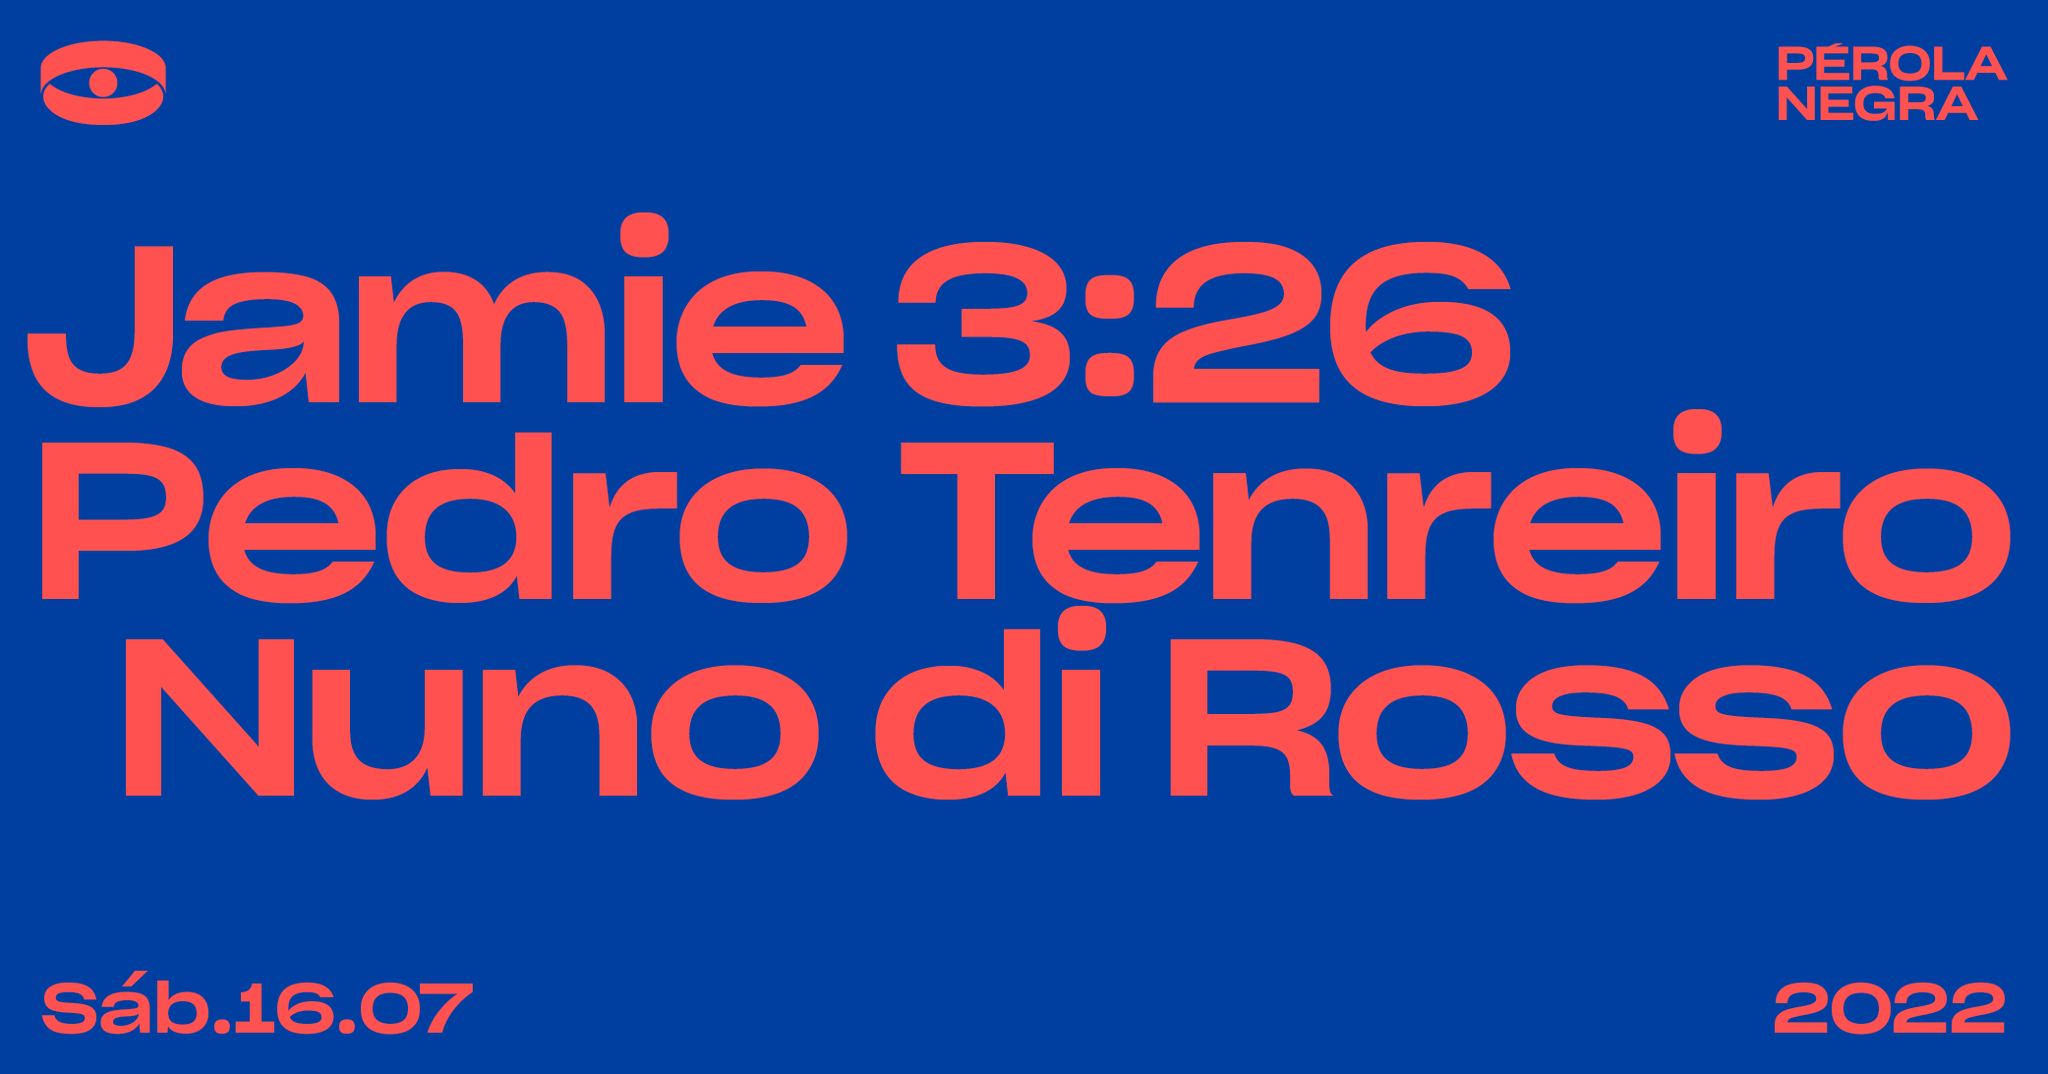 Jamie 3:26 | Pedro Tenreiro | Nuno di Rosso - Pérola Negra